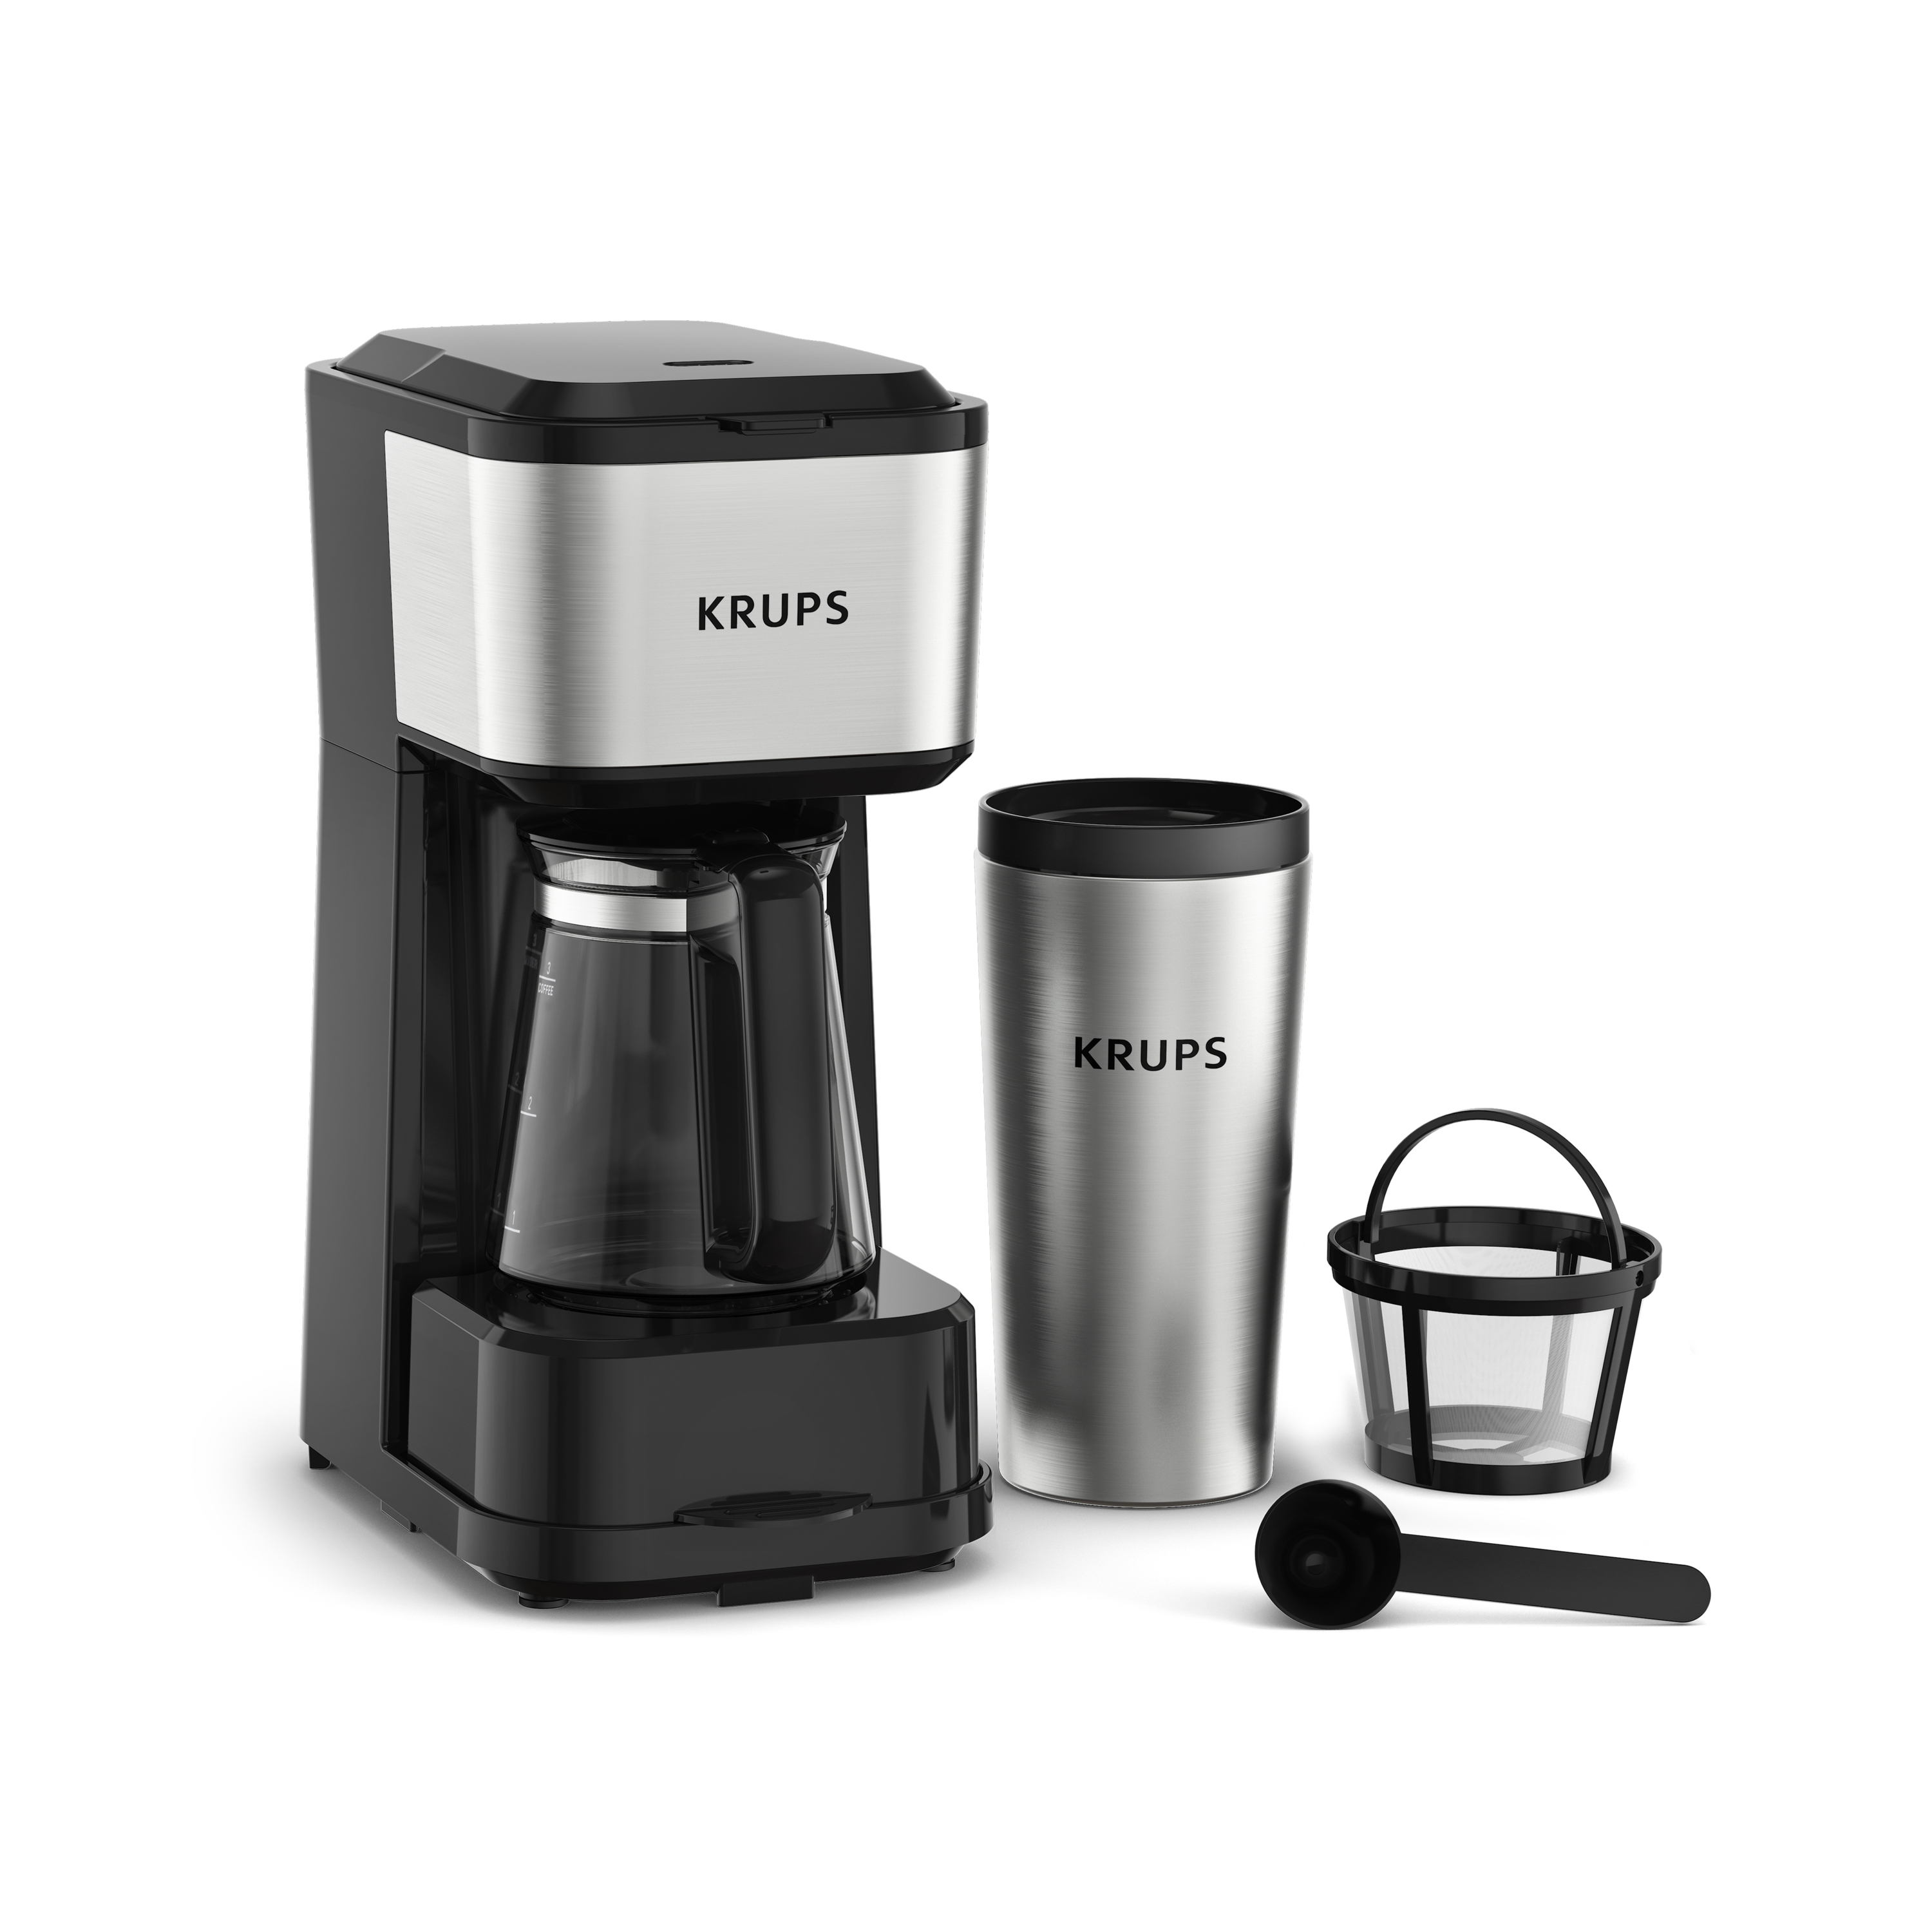 Krups Simply Brew 3-in-1 KM207D10 coffee maker